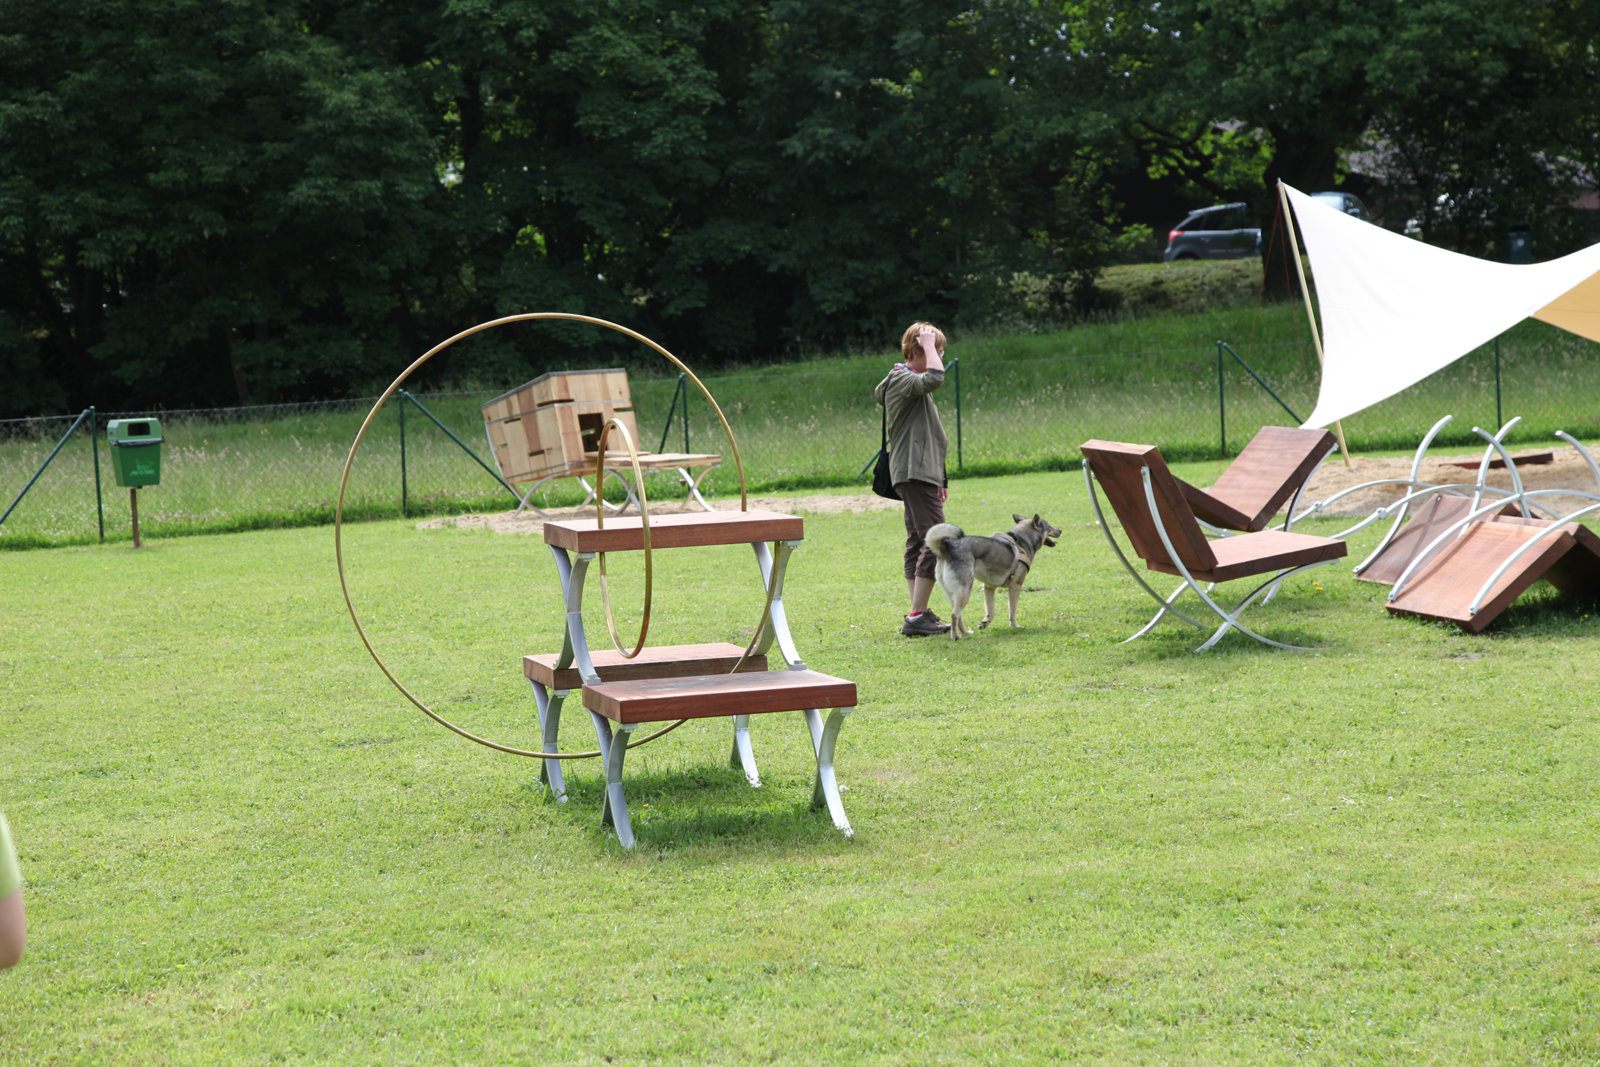 Brian Jungen, Dog Run, 2012, mixed media, dimensions variable. Installation view, dOCUMENTA (13), Kassel, Germany, 2012